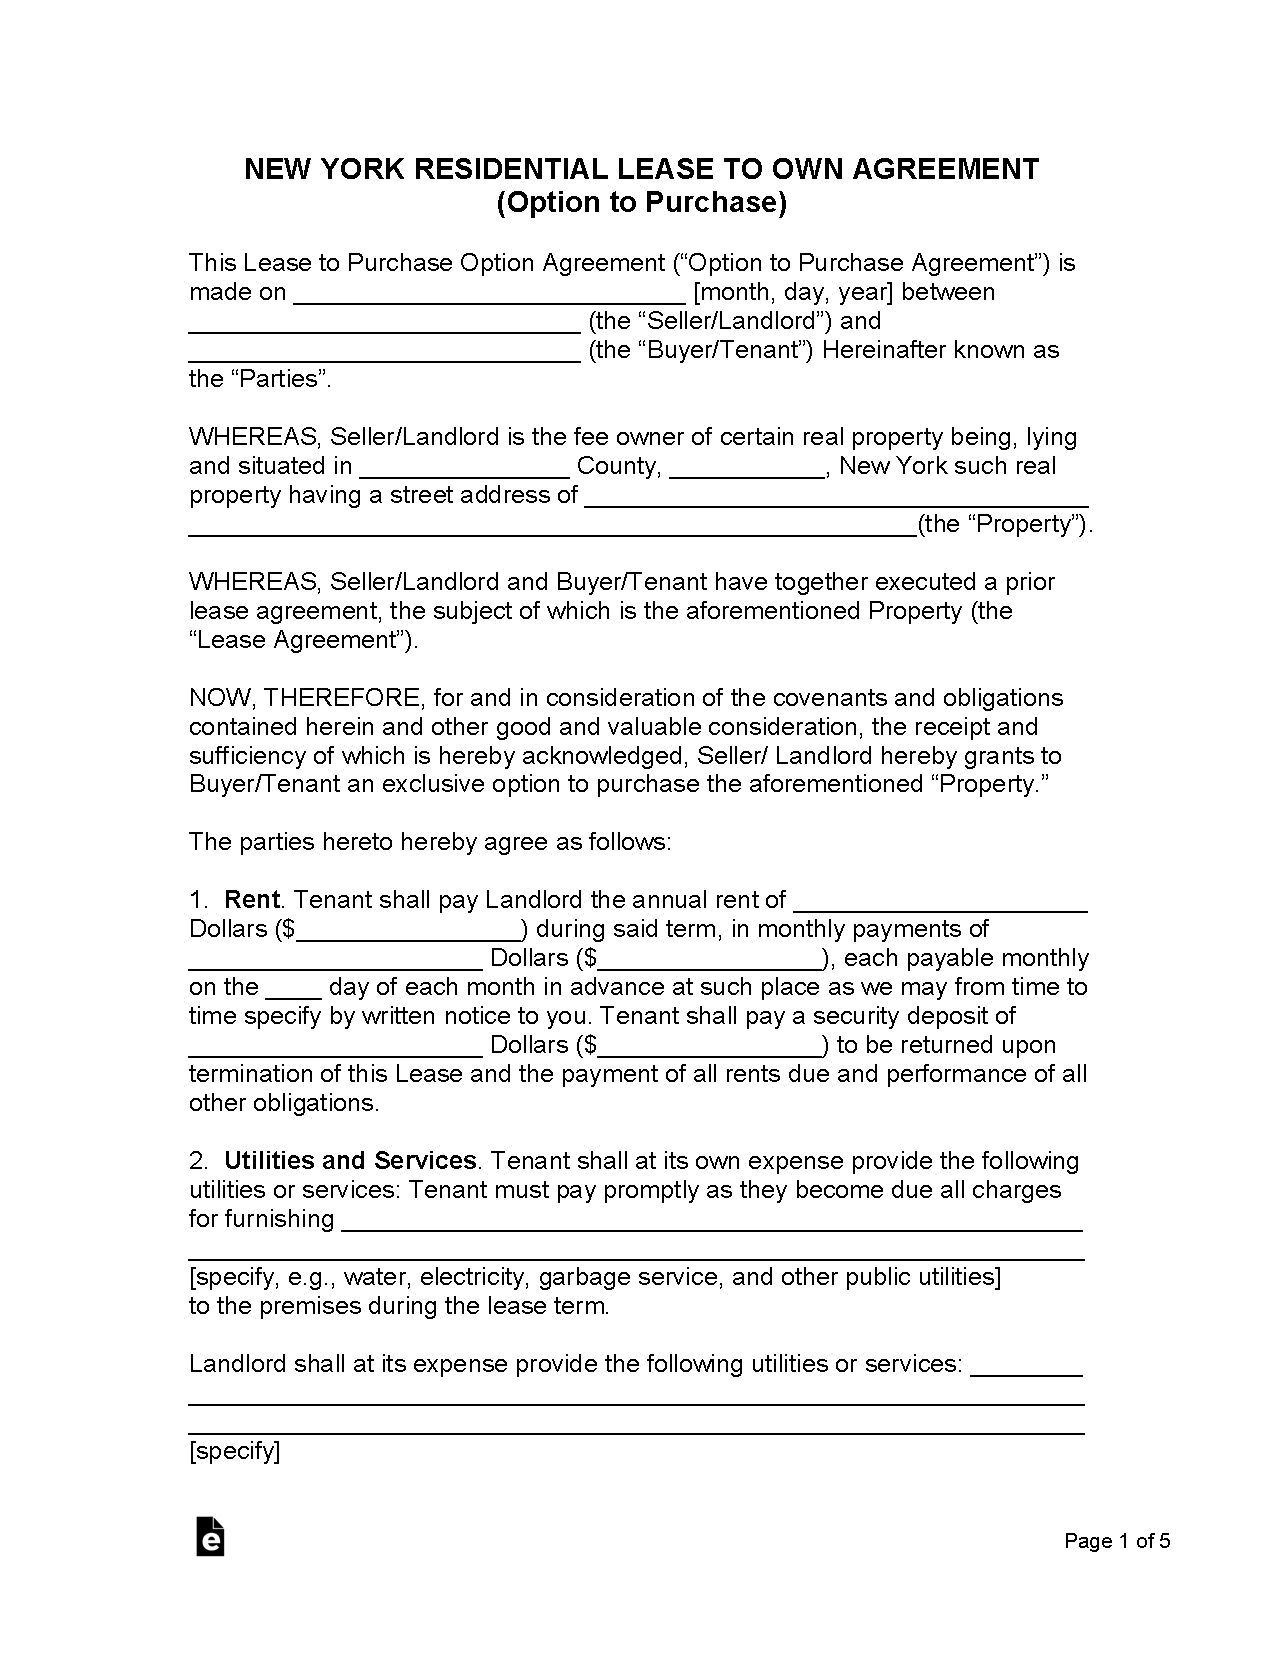 free-new-york-lease-agreement-templates-6-pdf-word-rtf